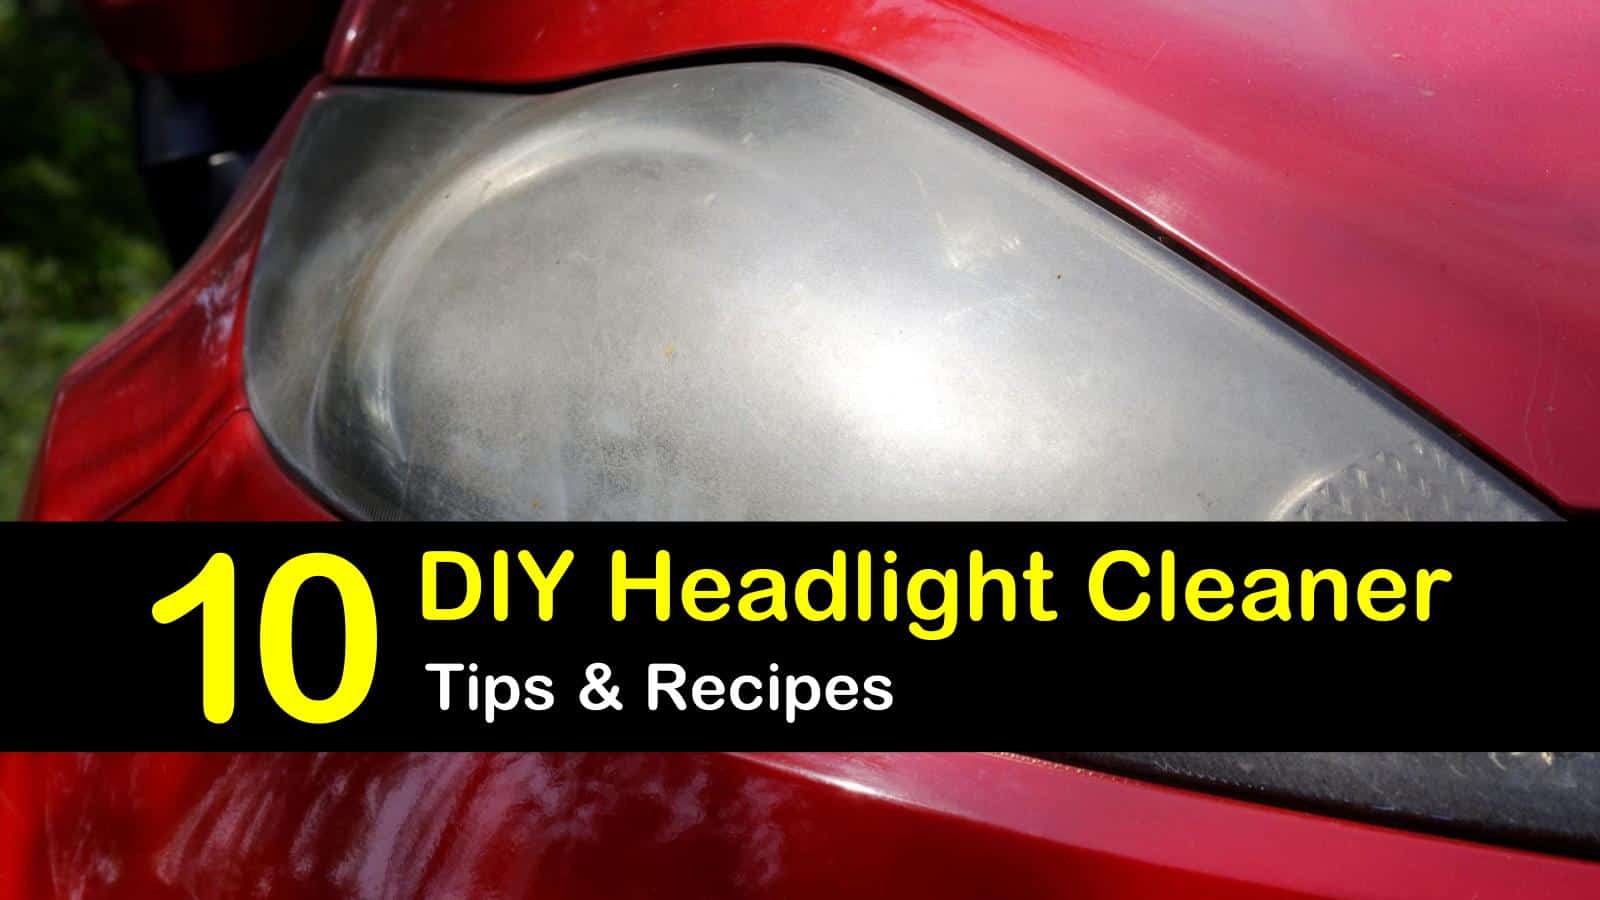 diy headlight cleaner titleimg1